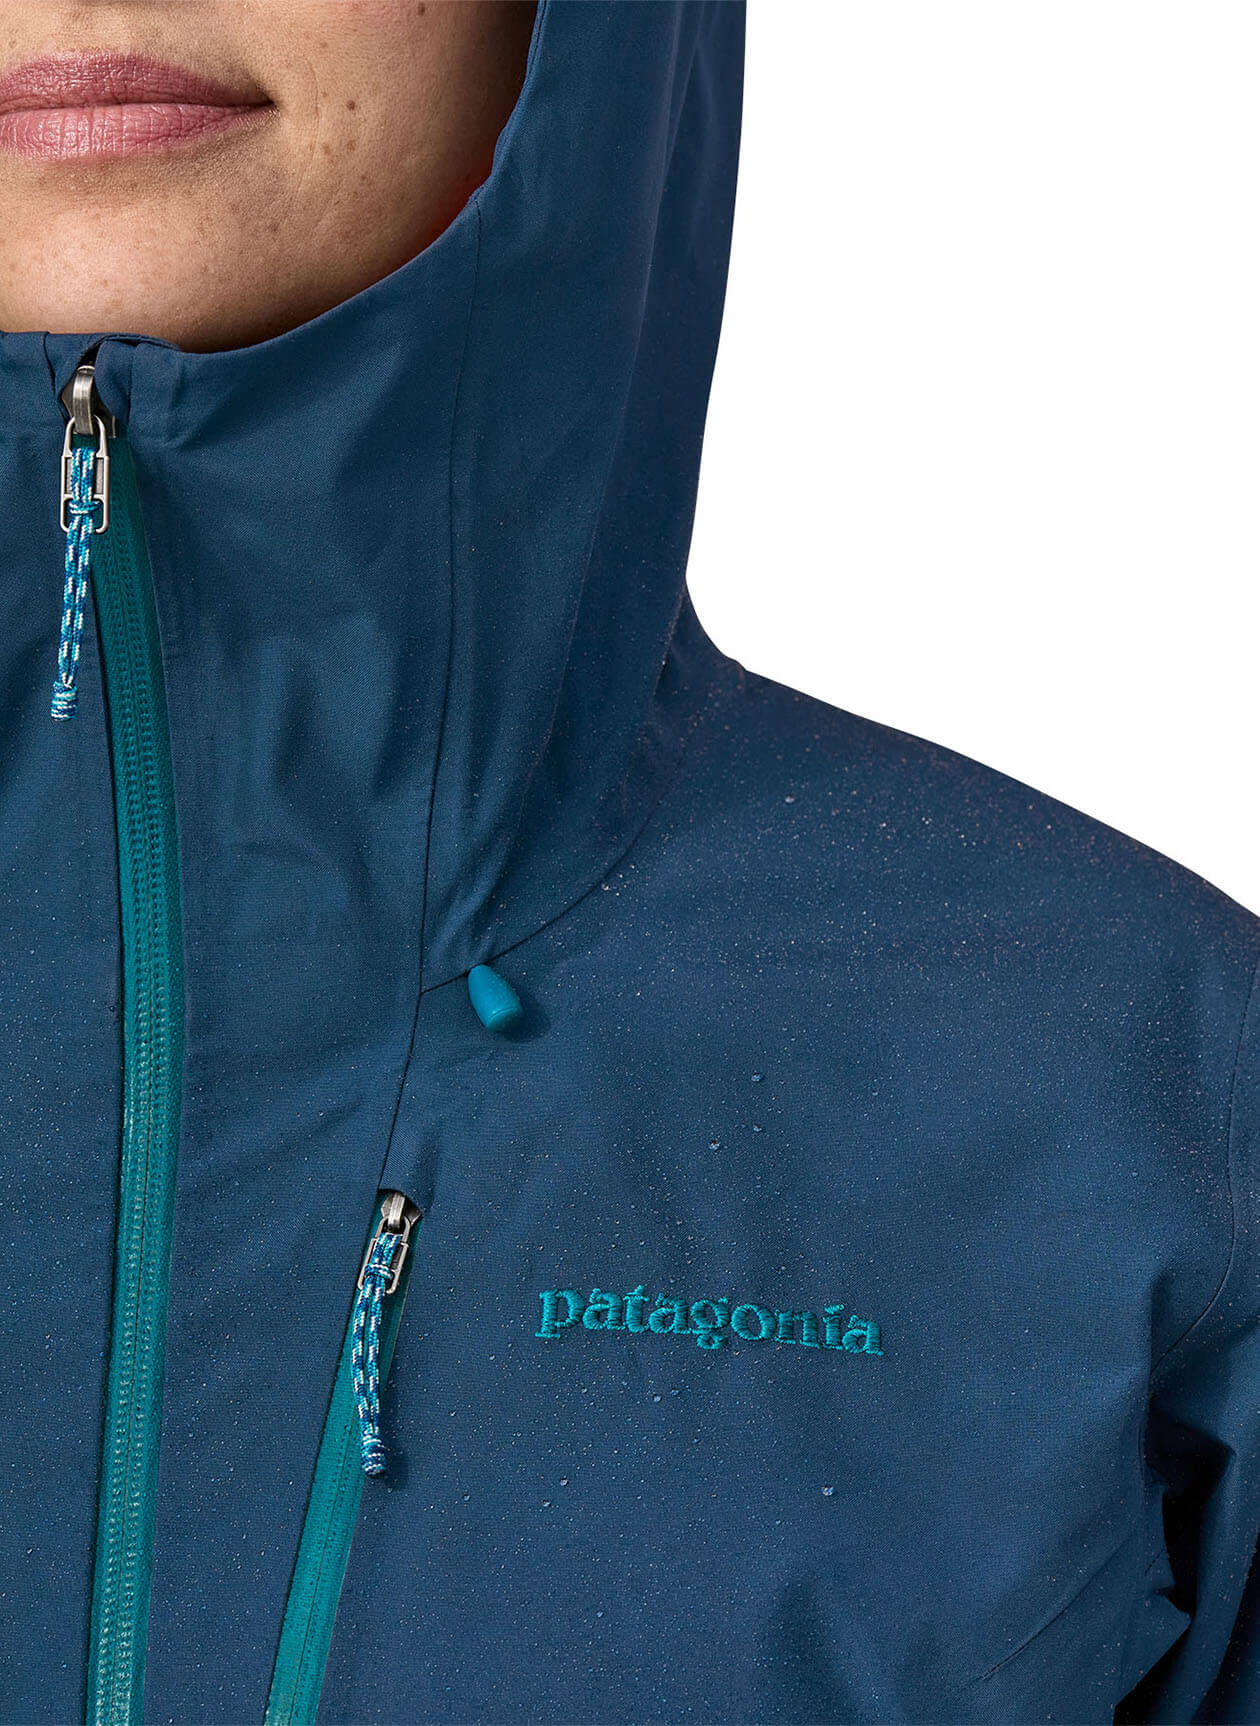 Patagonia Women's Triolet Jacket